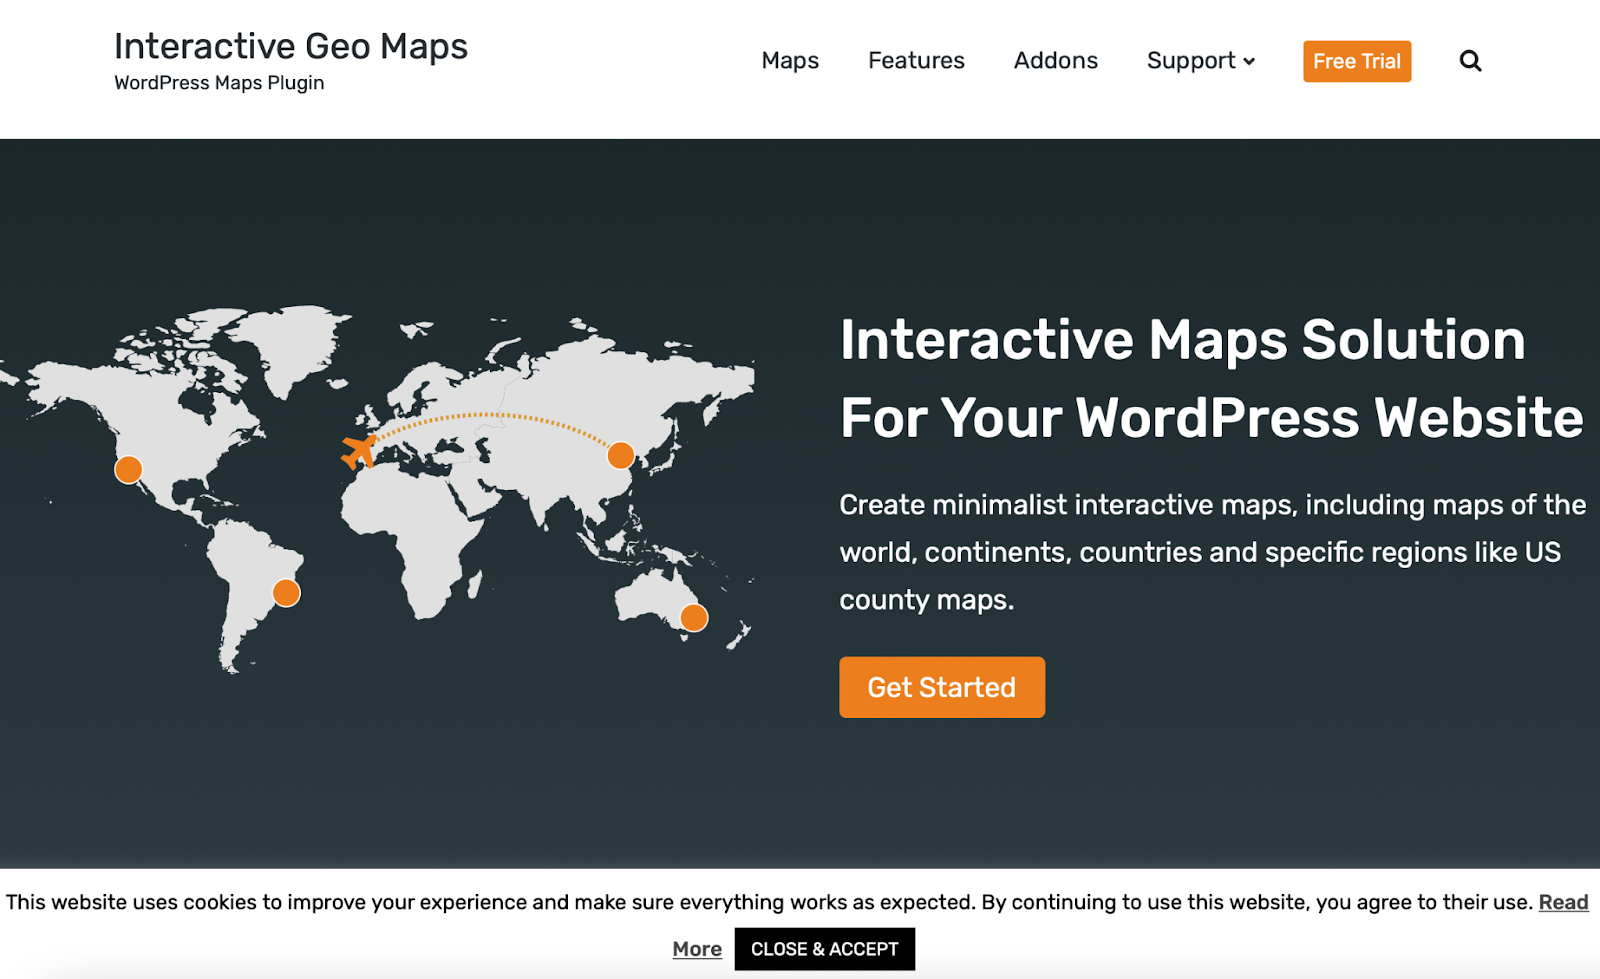 Interactive-geo-maps-worpdress-plugin-interface.jpg